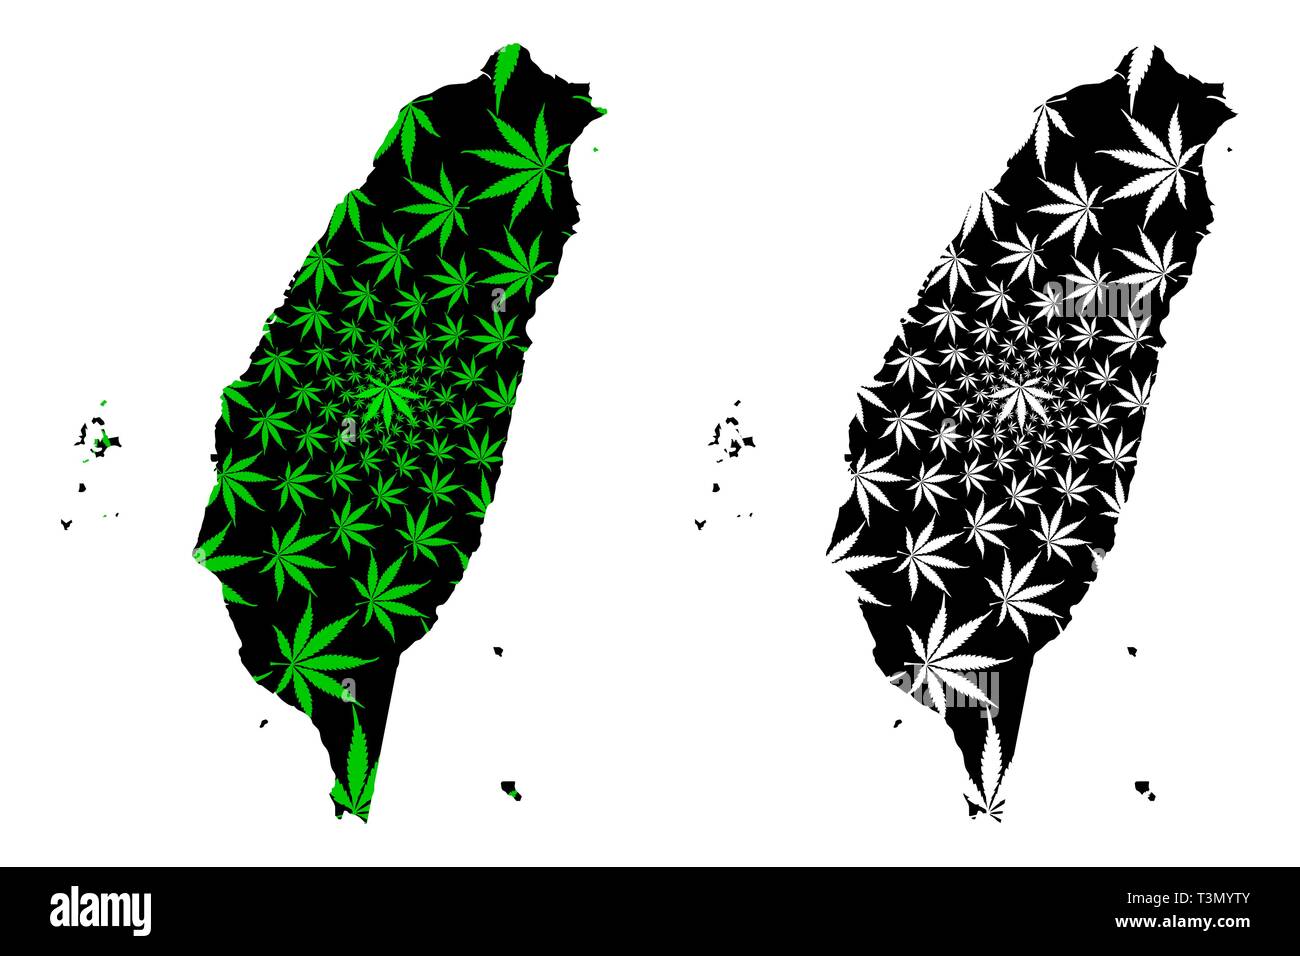 Taiwan - Karte ist Cannabis blatt grün und schwarz, Republik China (ROC) Karte aus Marihuana (Marihuana, THC) Laub, Stock Vektor